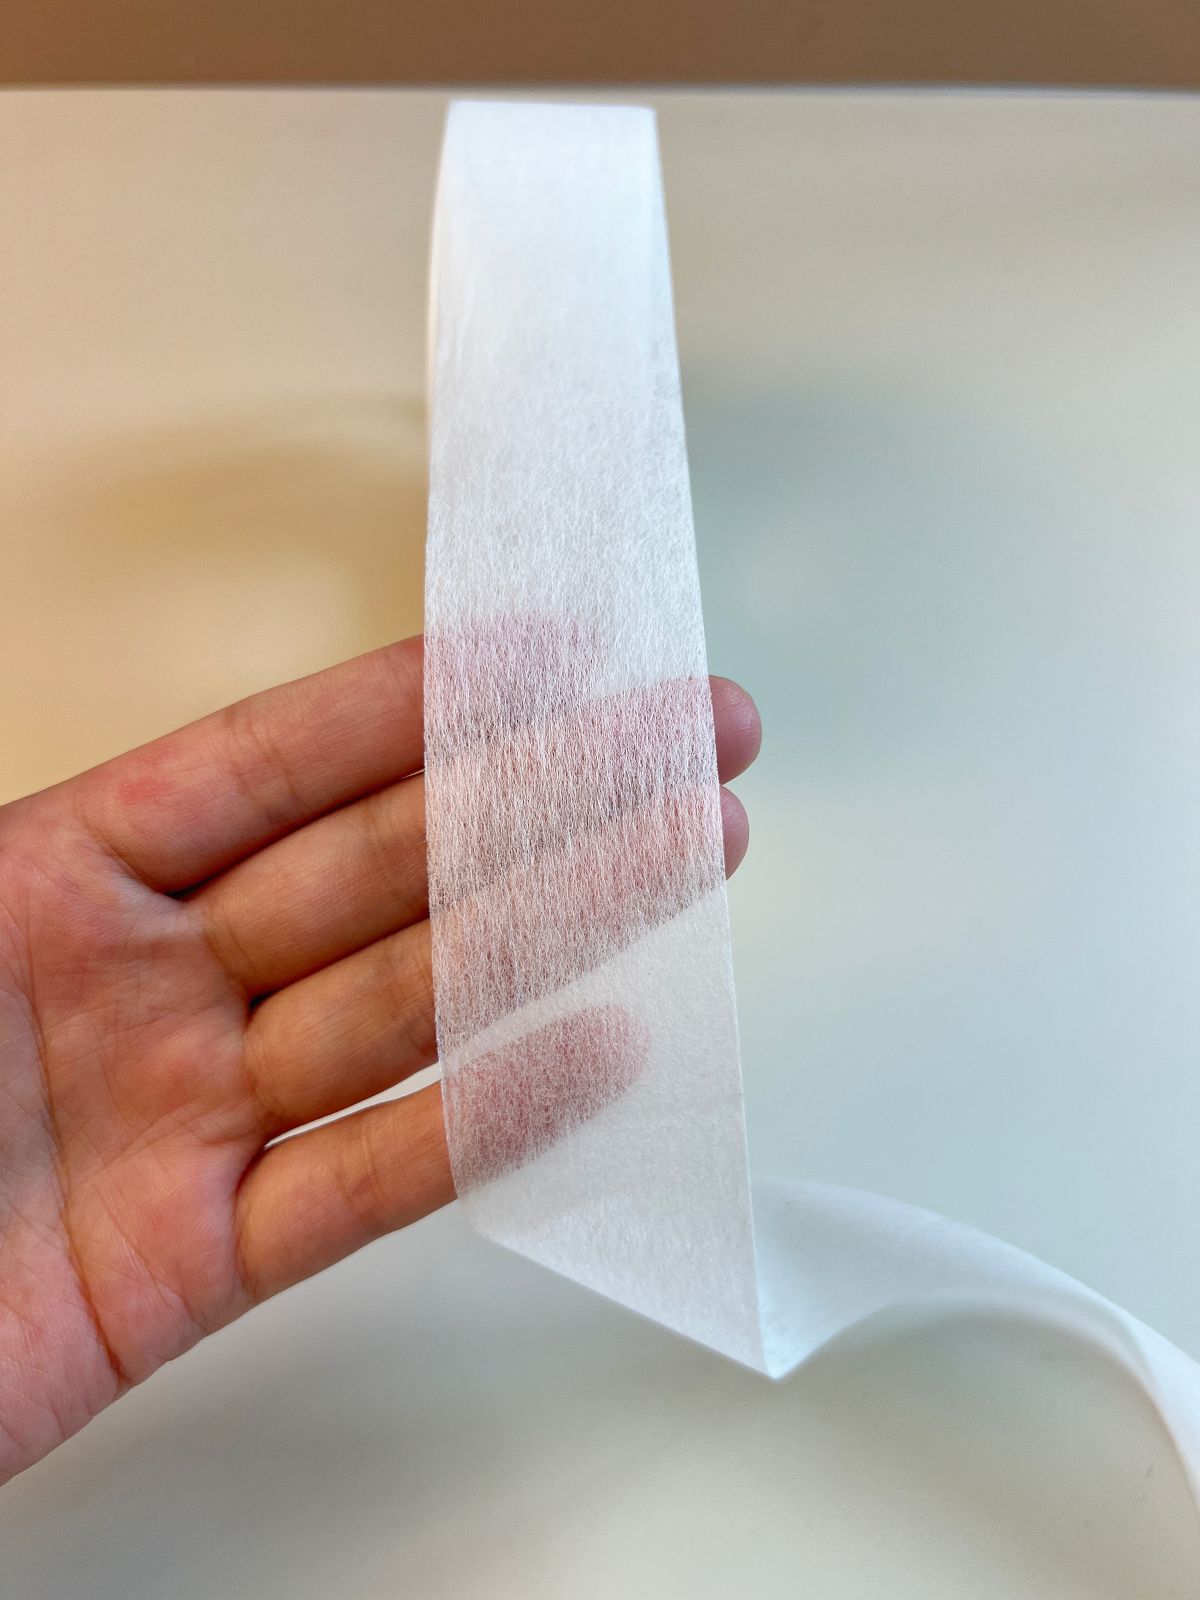 28g heat seal Snus paper filter